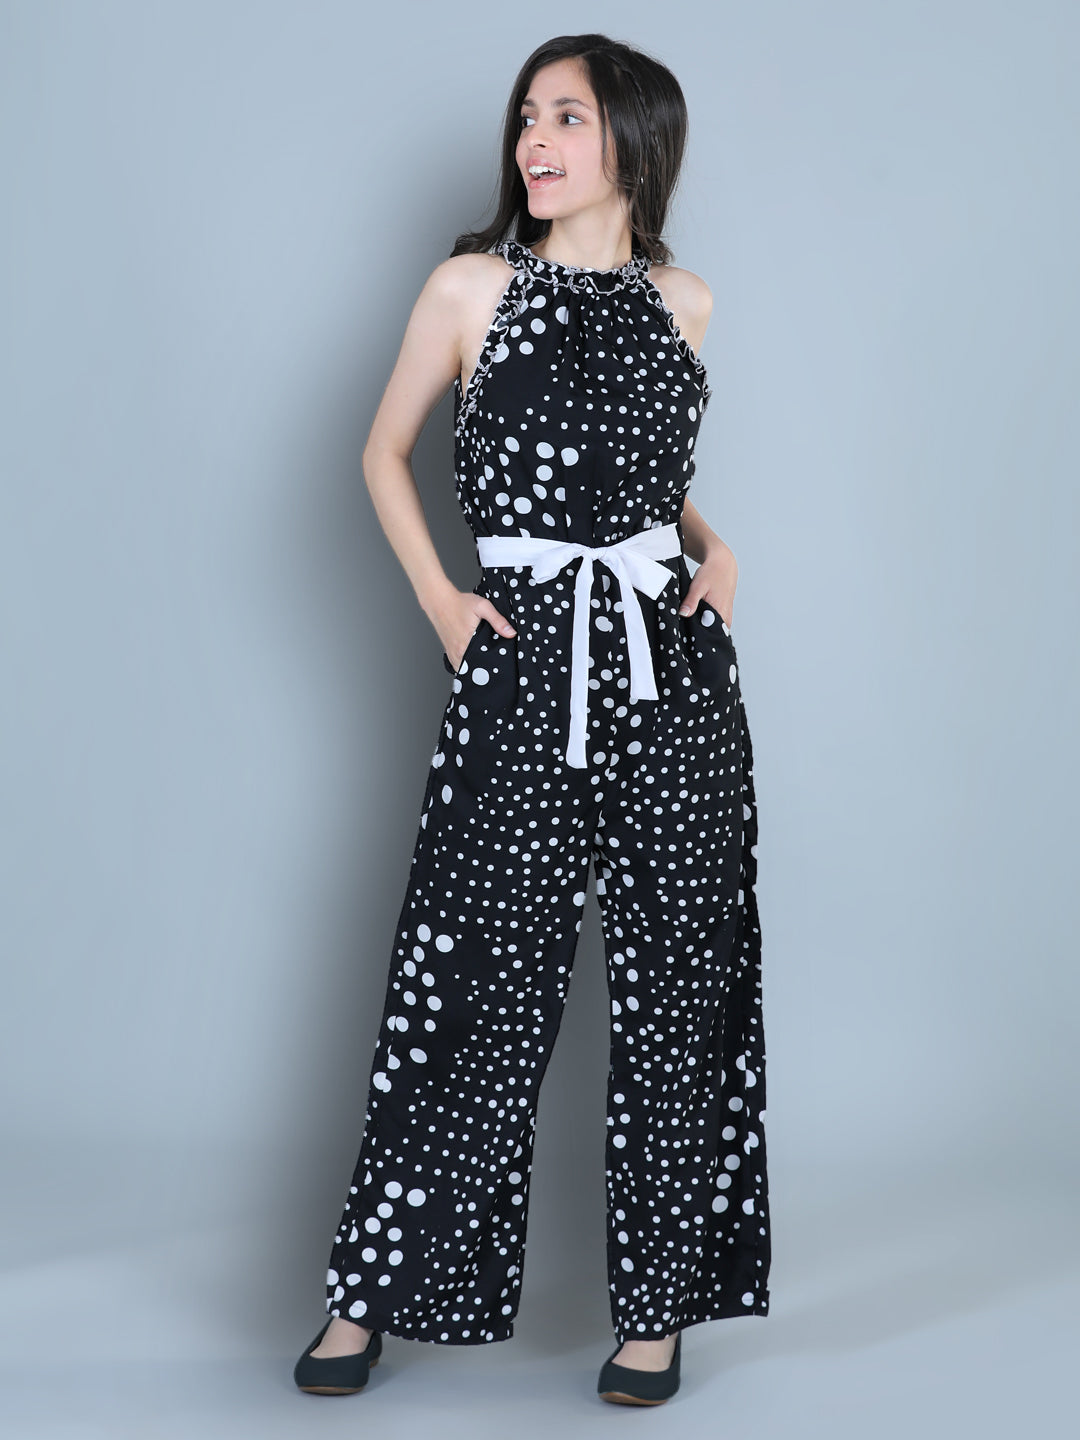 Cutiekins Polka Dot Printed Polyester Jumpsuit -White & Black